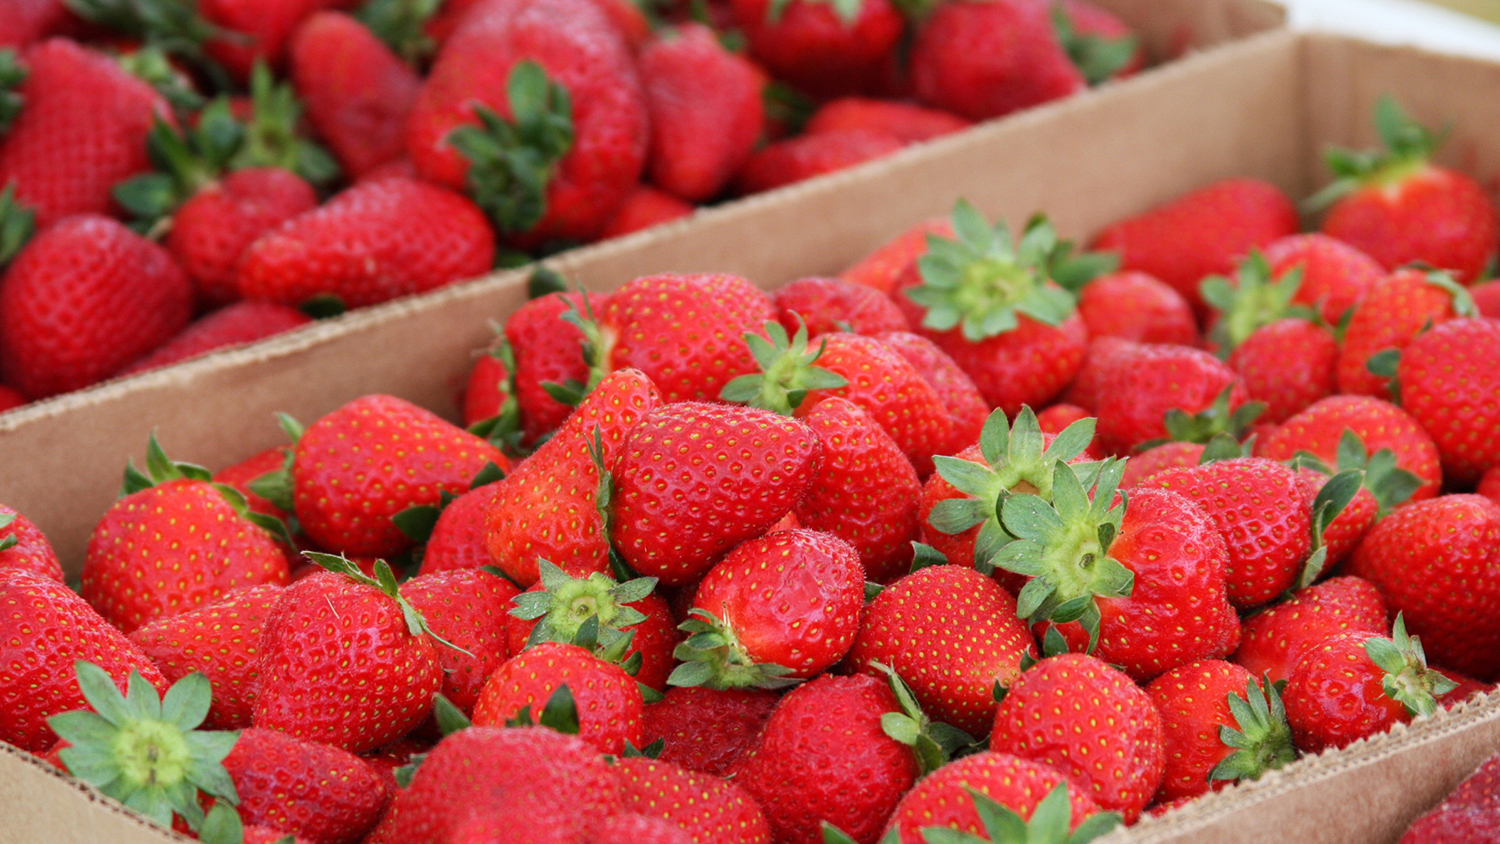 Strawberries in cartons